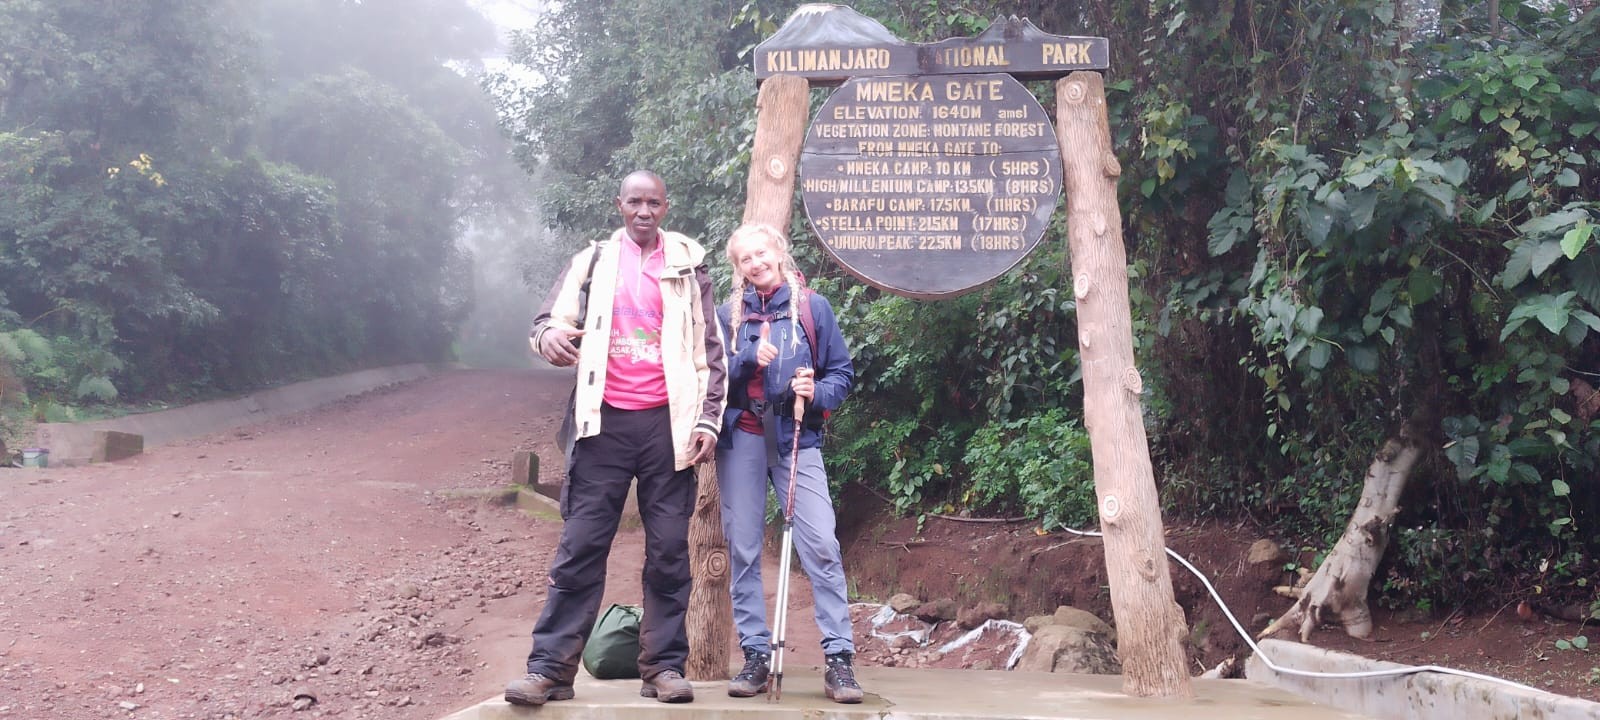 Climbing mount kilimanjaro trekking hiking active adventures epic tours safaris yha kenya travel mountain adventures tanzania tours 4 1